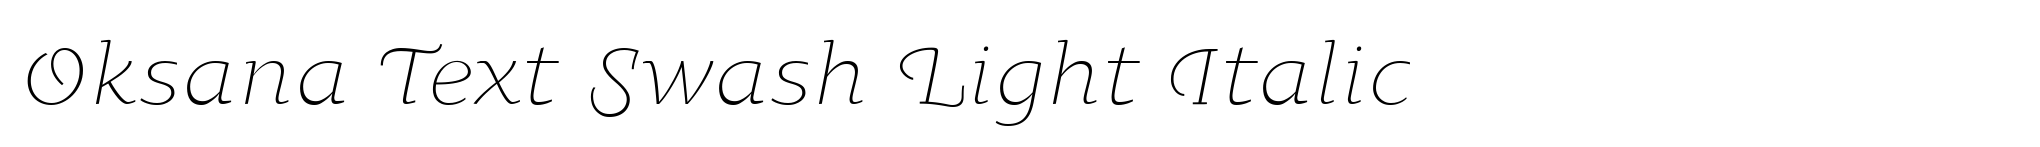 Oksana Text Swash Light Italic image